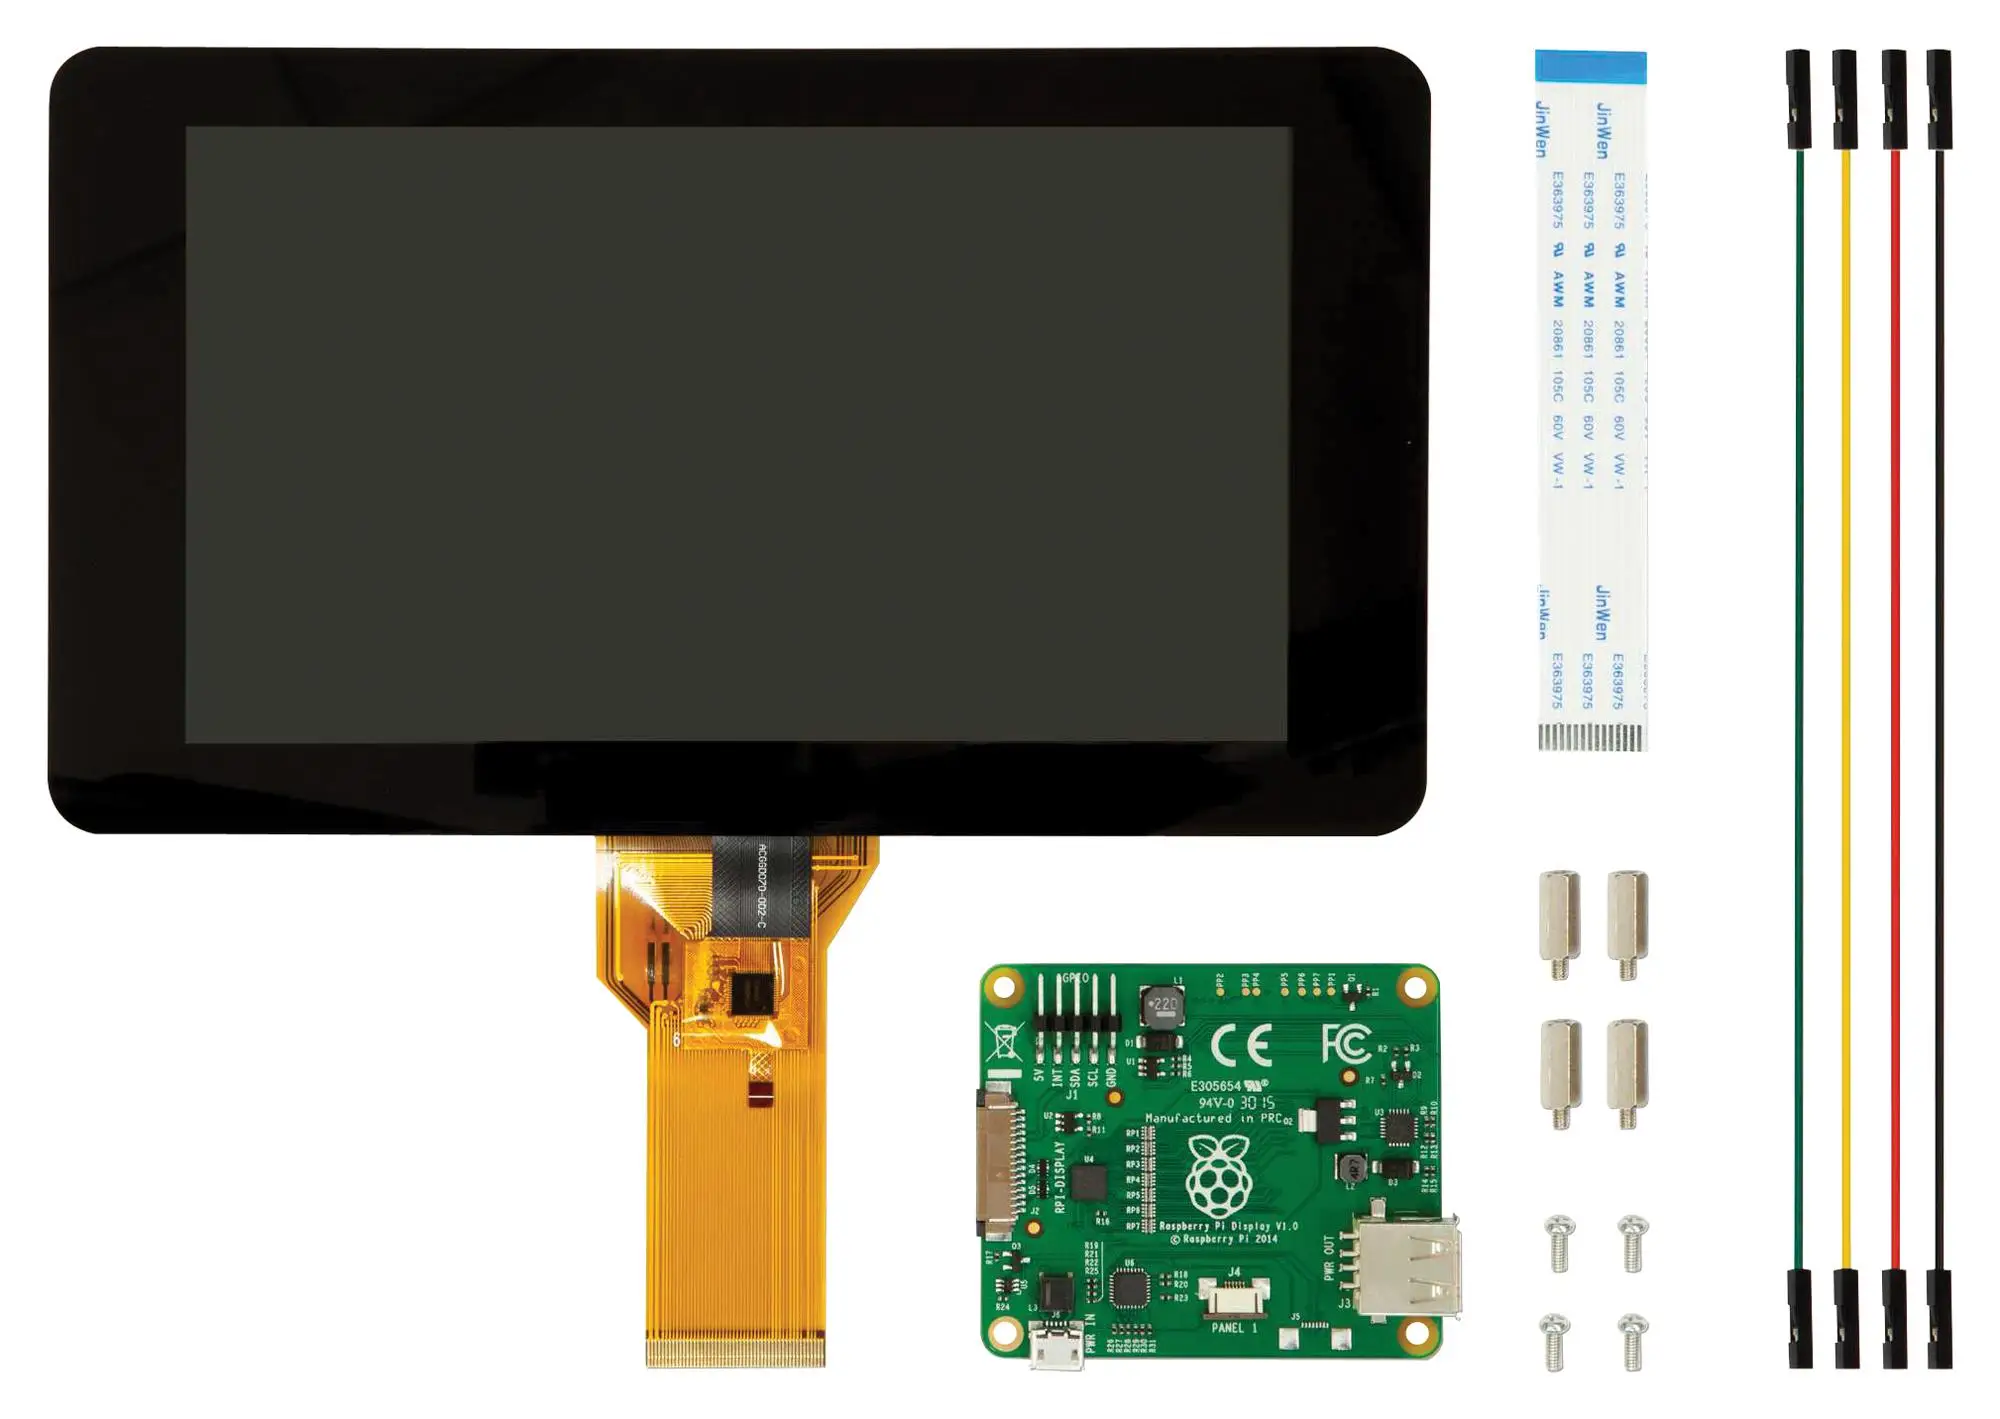 

RASPBERRYPI-DISPLAY. Touch Screen Display, Raspberry Pi Single Board Computers, 7 Inch